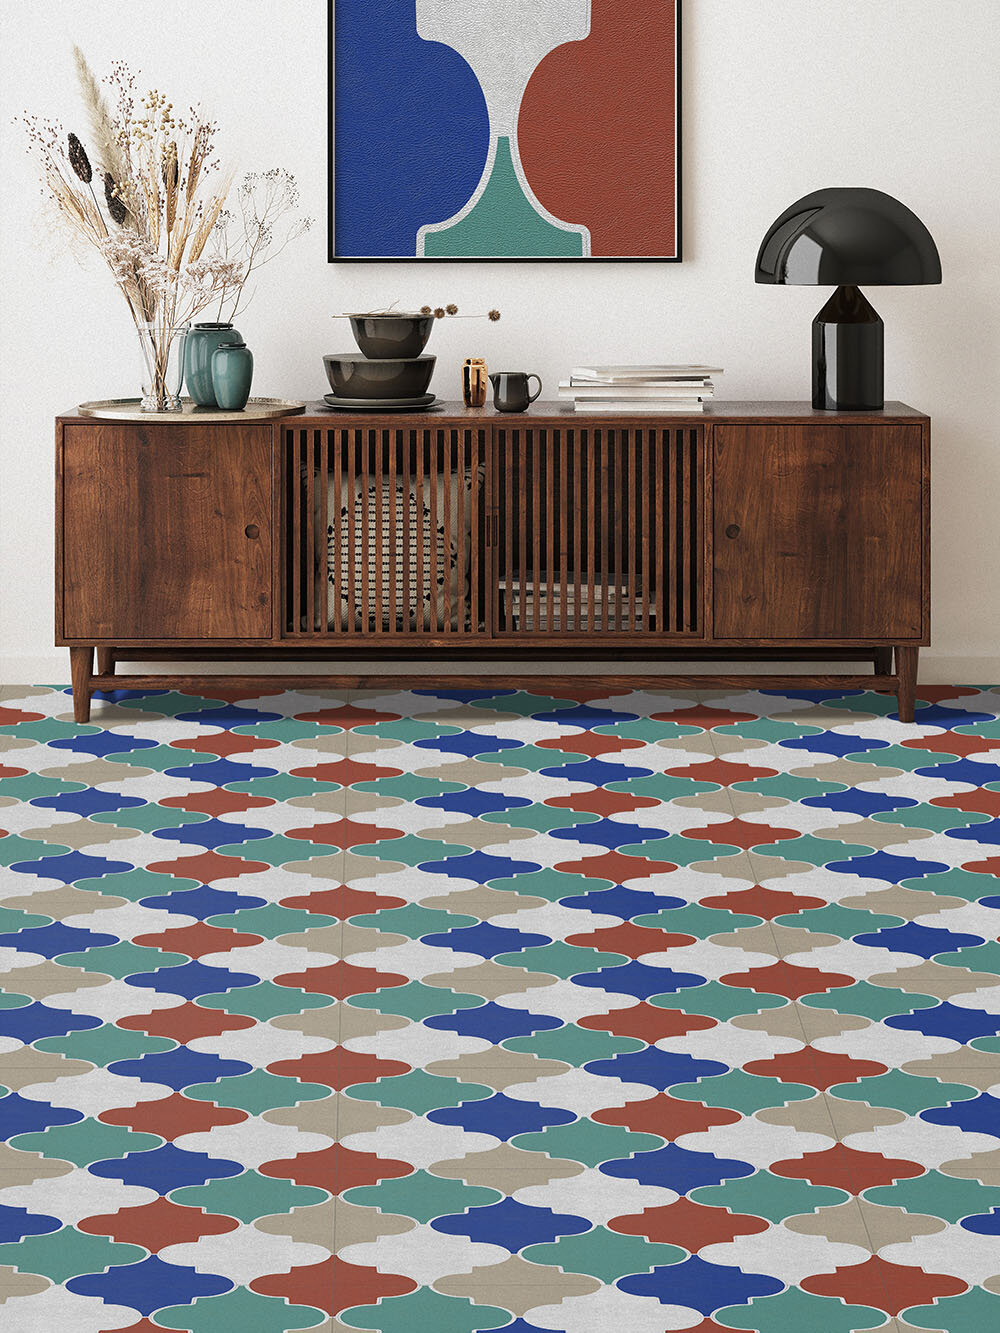 Royal Blue Pinwheels handmade ceramic tiles for mosaic design.